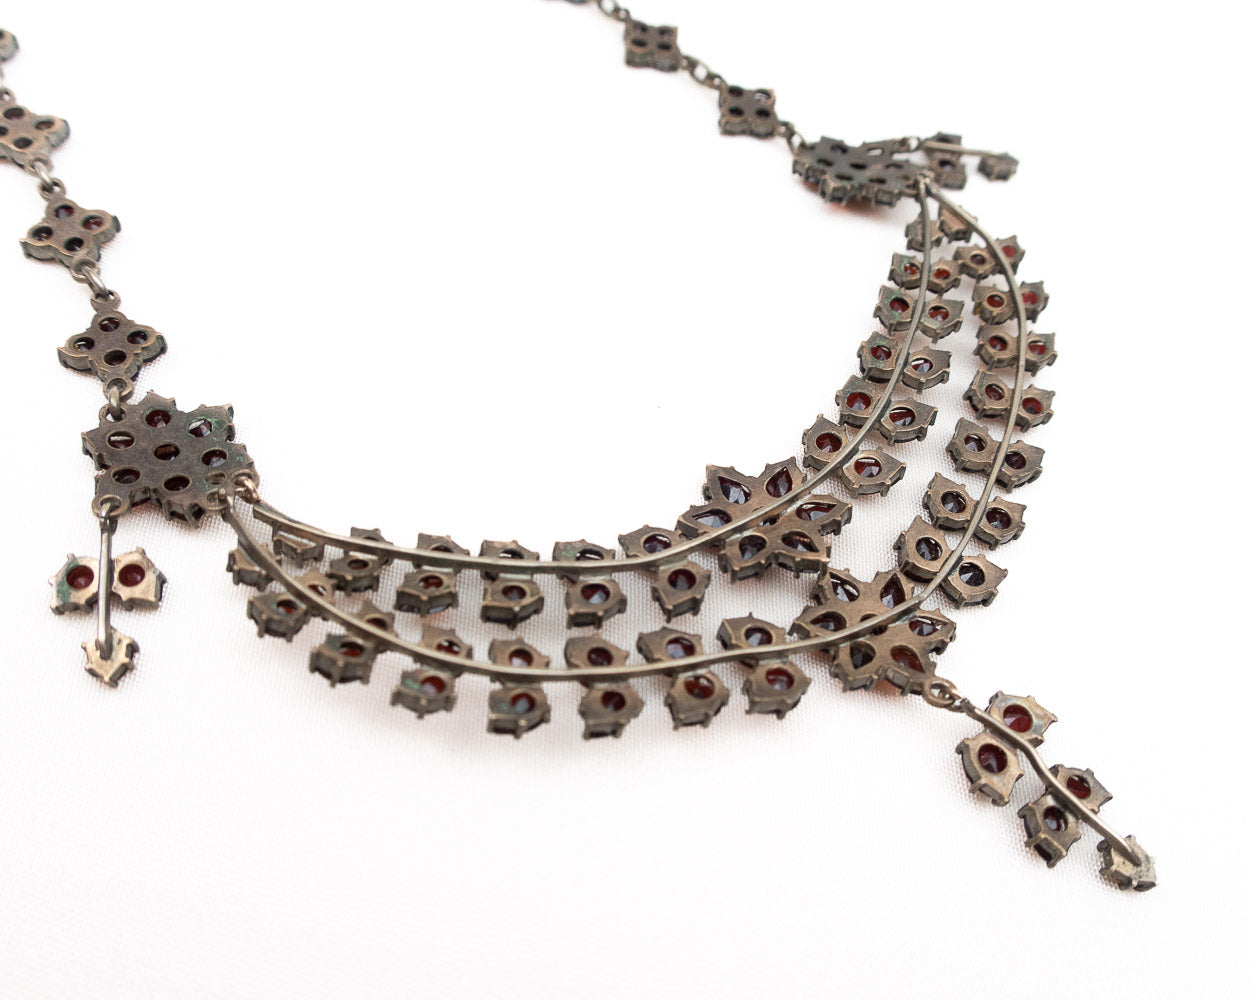 Late Victorian Flat-Cut Garnet Necklace